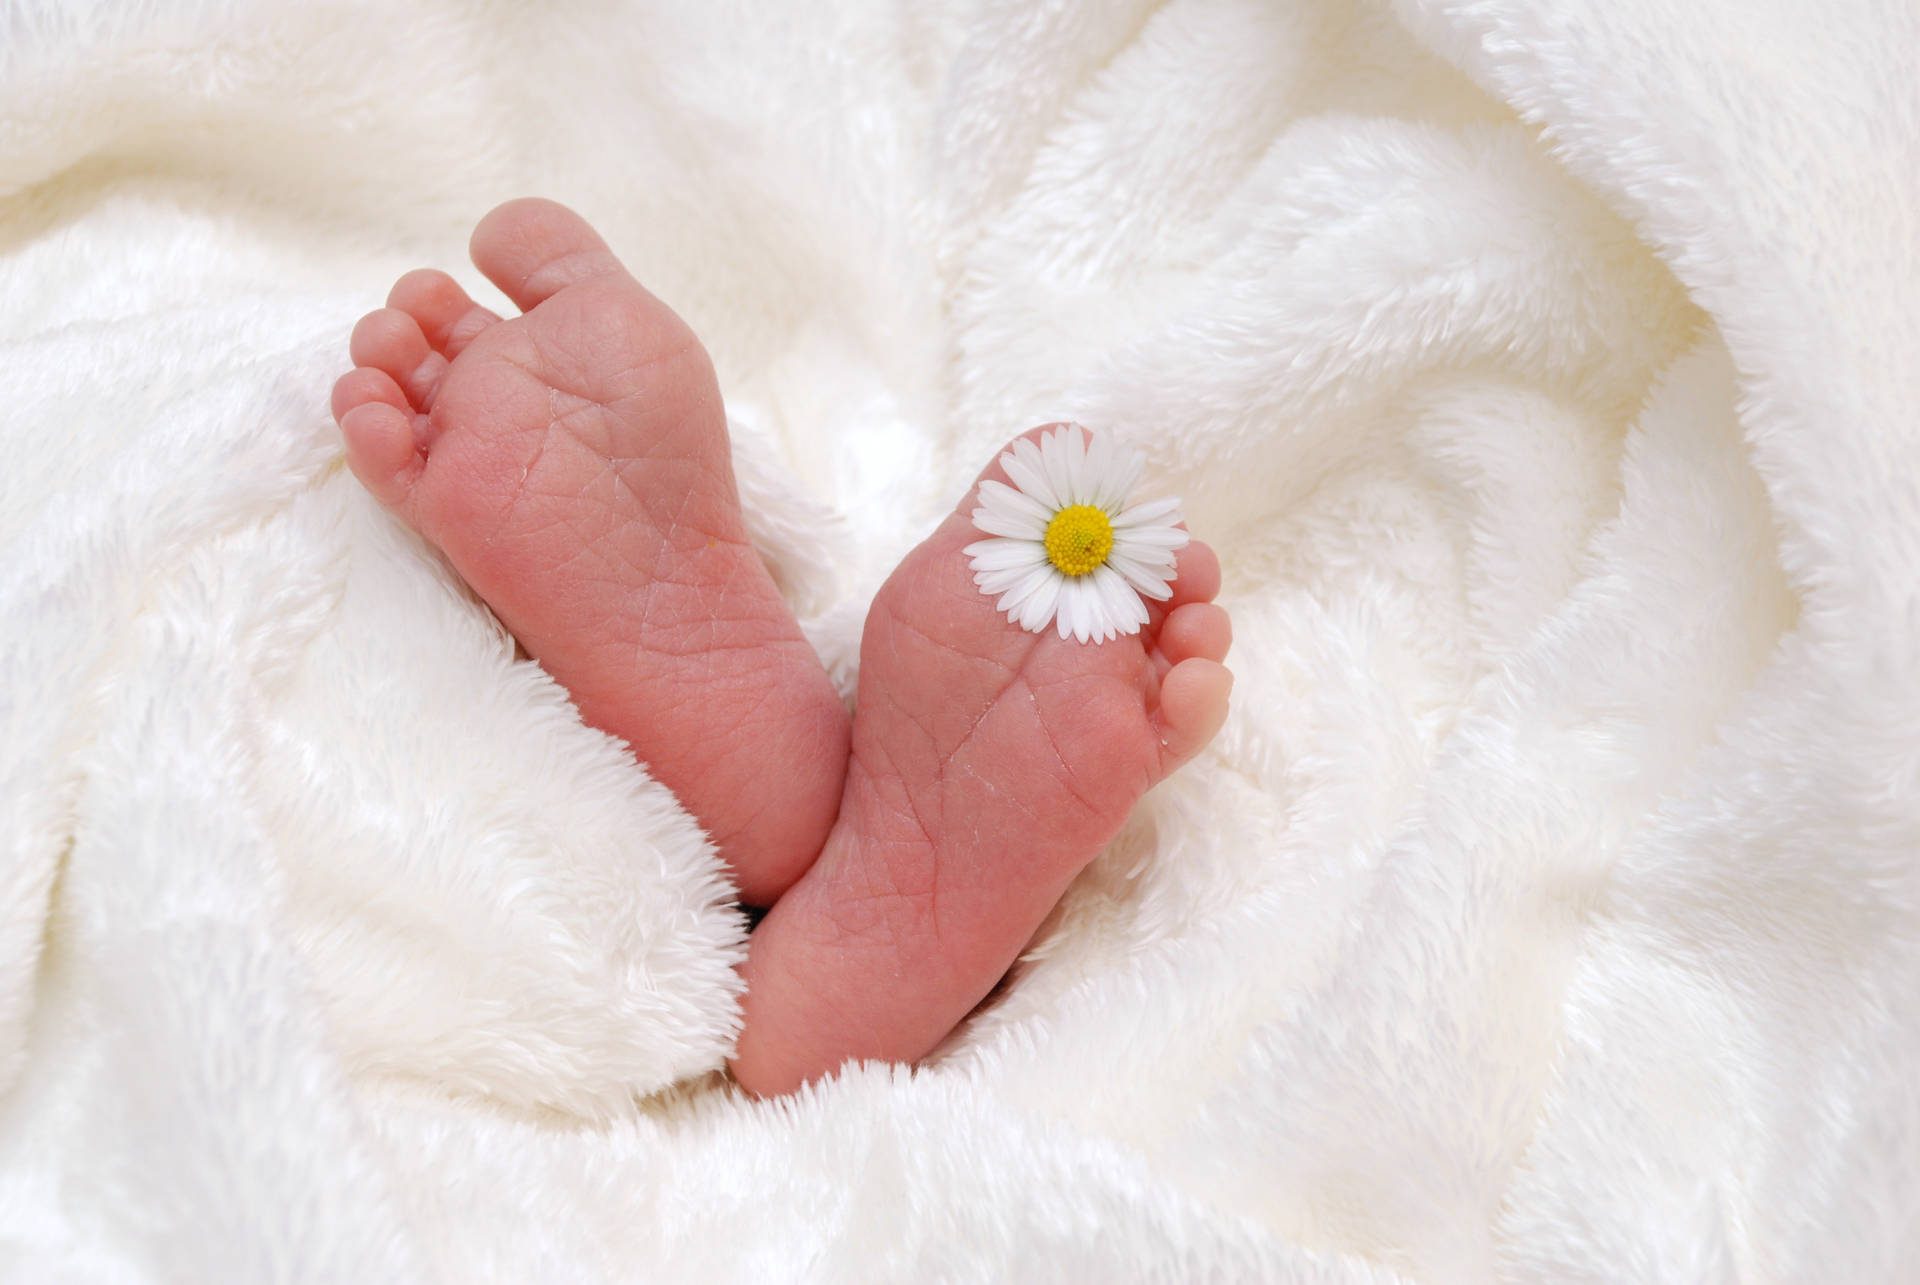 Newborn Delicacy - Baby's Feet with Daisy Flower Wallpaper